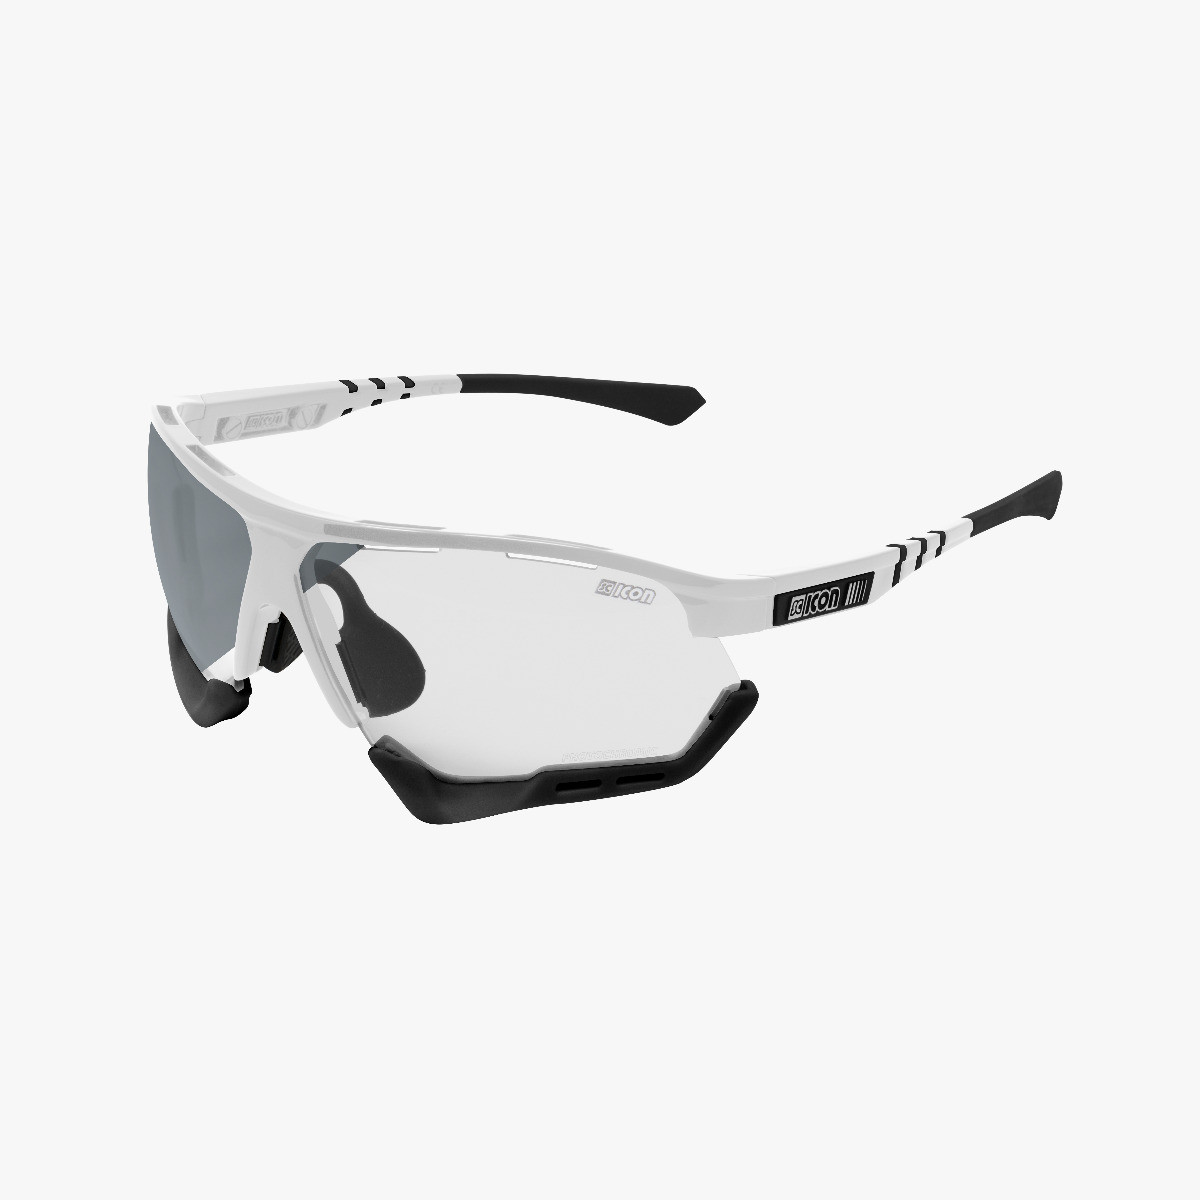 Aerocomfort cycling sunglasses scnxt photochromic white frame silver lenses EY19180405
